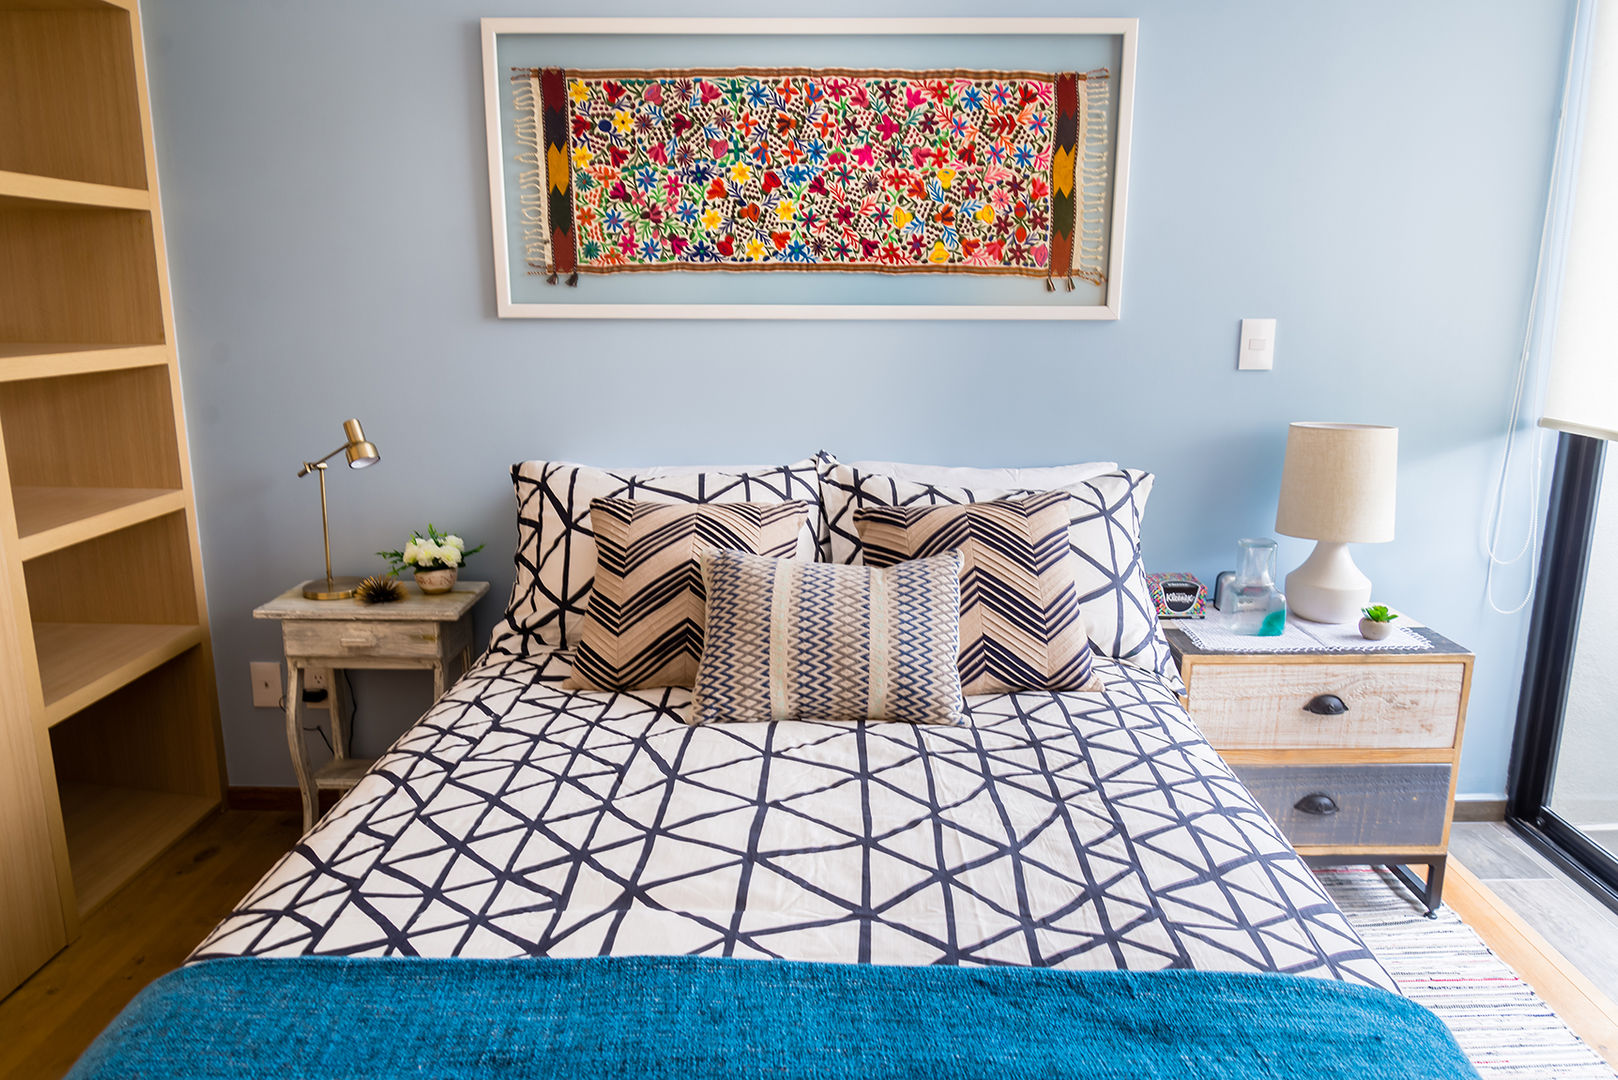 Choapan Decor by Erika Winters®Design, Erika Winters® Design Erika Winters® Design Eclectic style bedroom